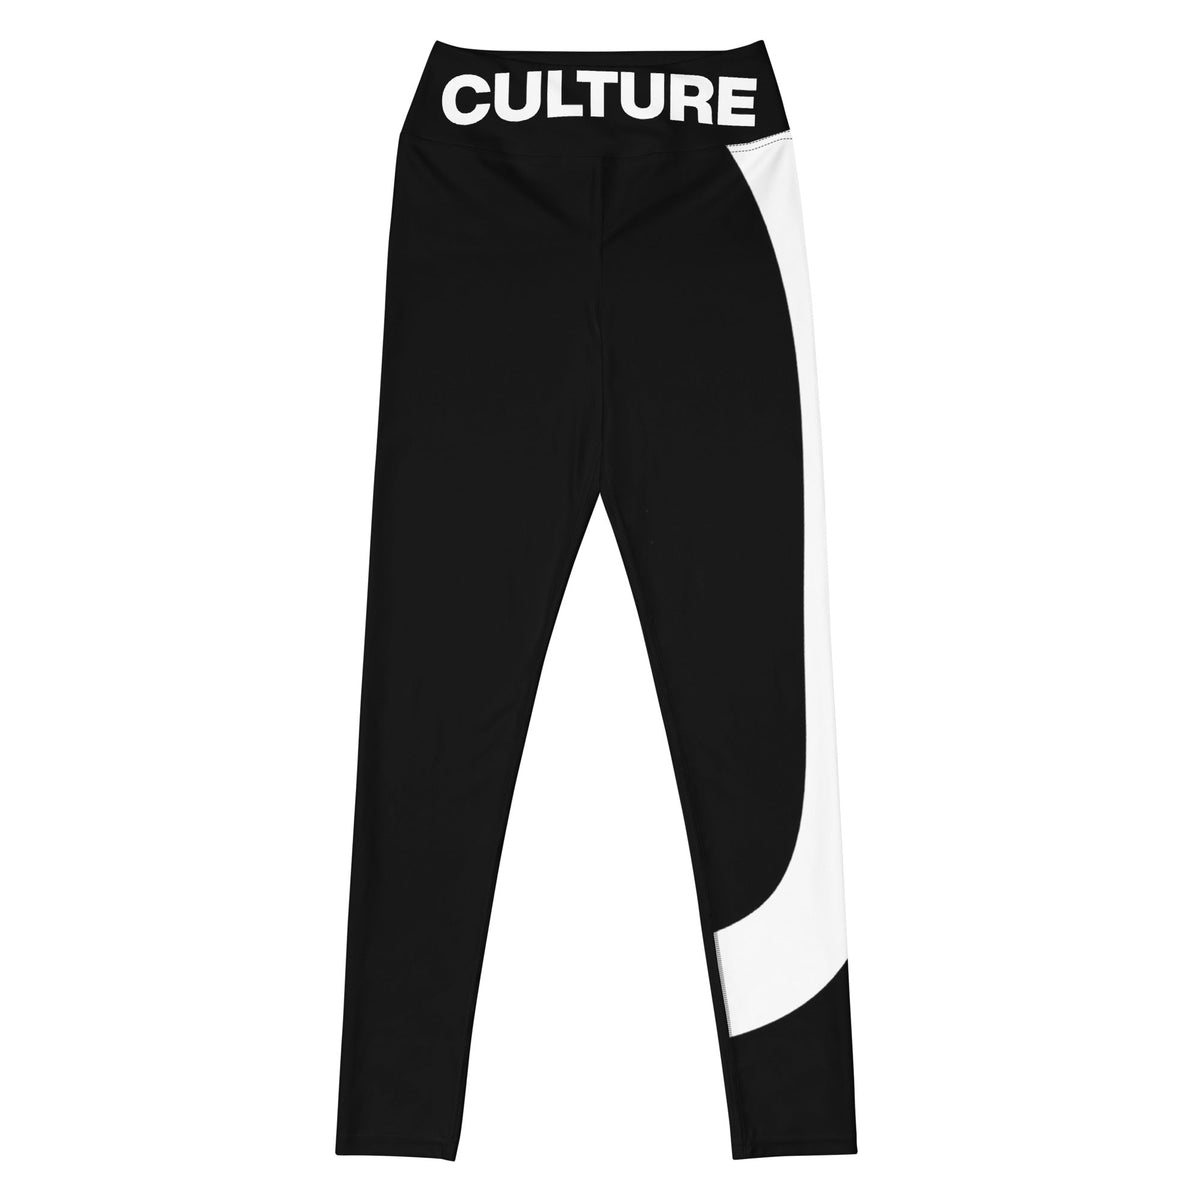 Block Culture Yoga Leggings - For The Culture Clothing Inc.